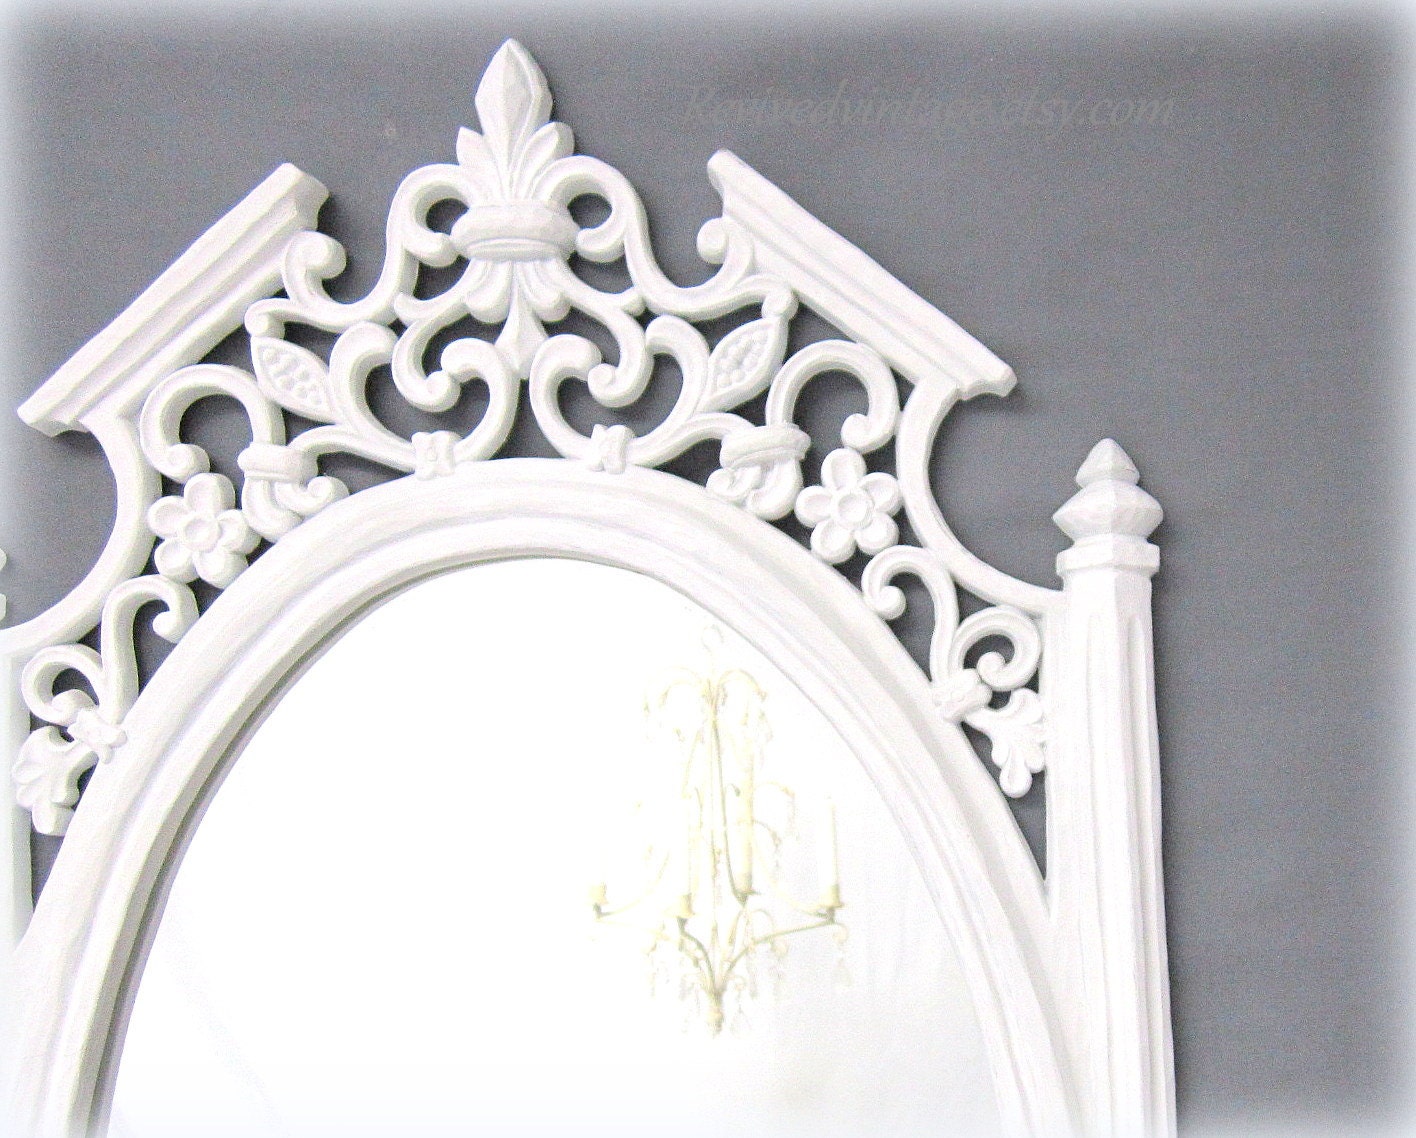 NEOCLASSIC WHITE Framed MIRROR Regency Decor Decorative White Mirror For Vanity Mirror Bathroom Old World Style Framed Mirror White - RevivedVintage